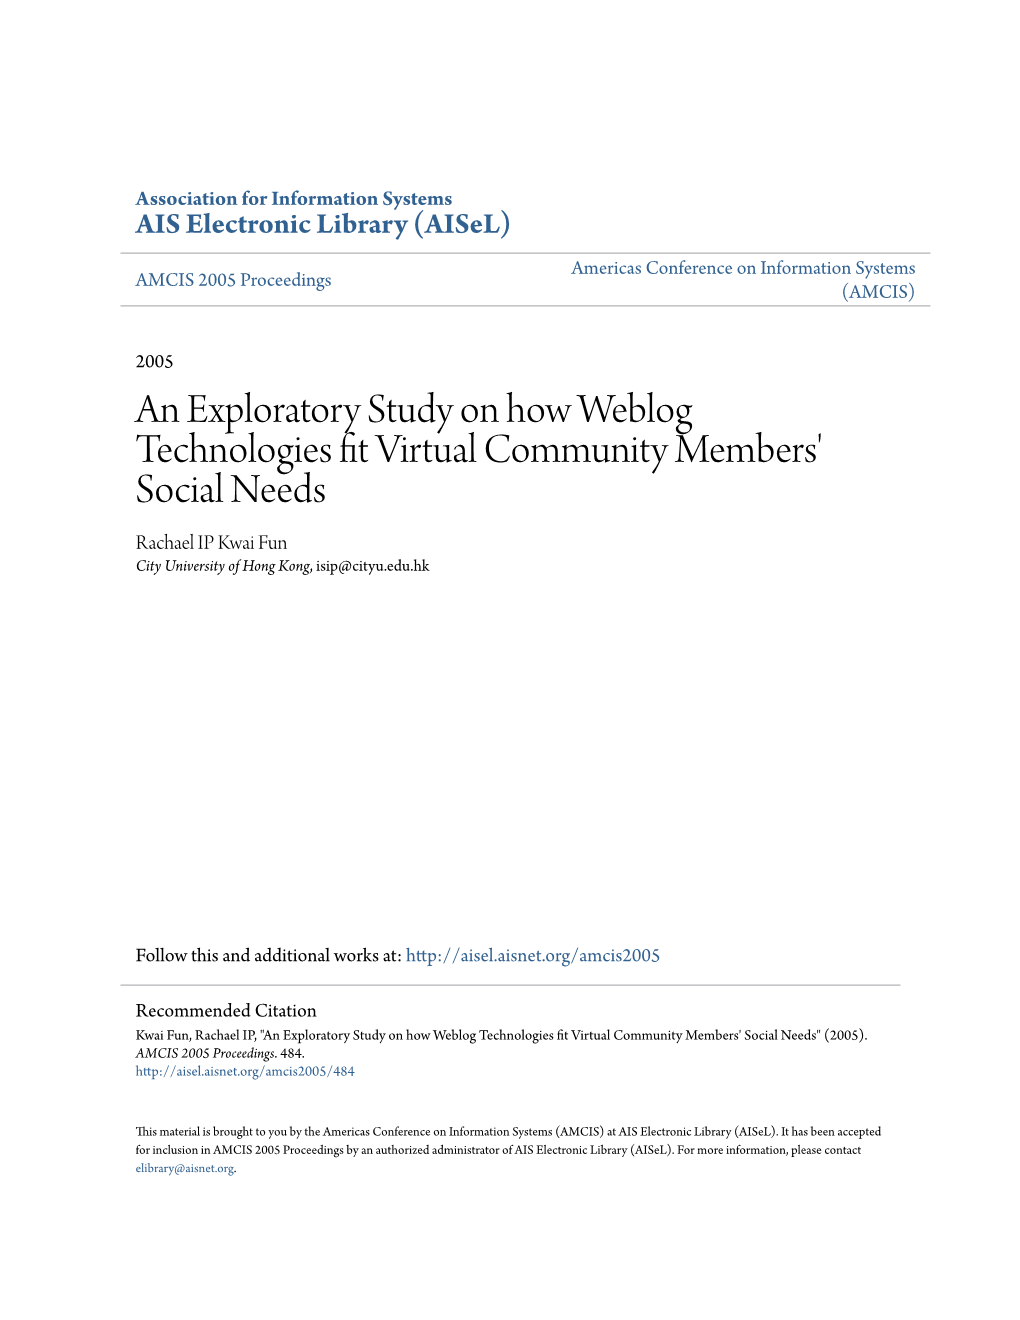 An Exploratory Study on How Weblog Technologies Fit Virtual Community